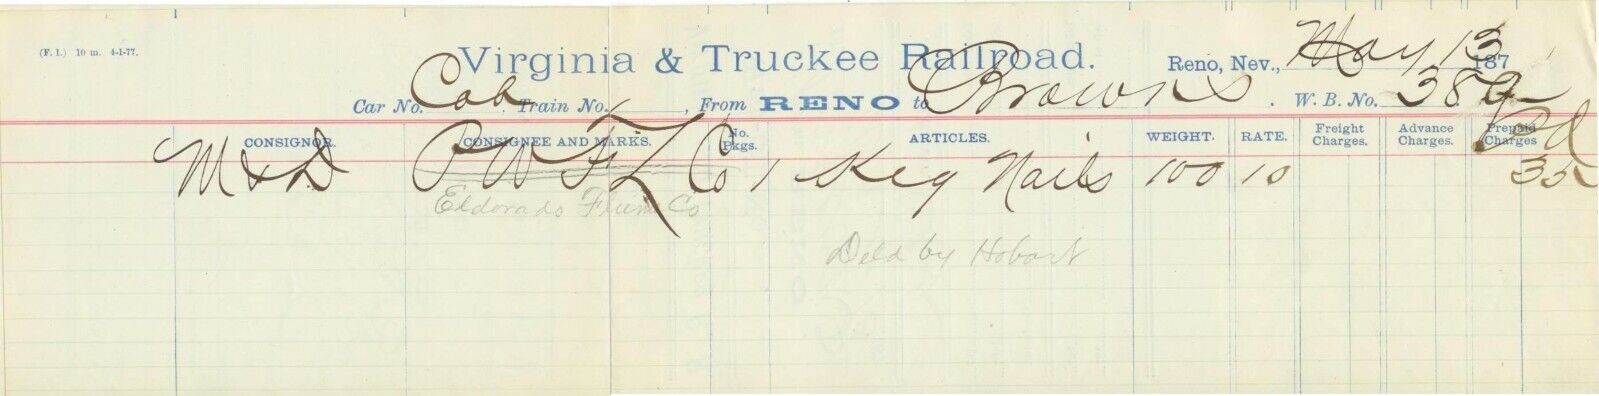 1880s Virginia & Truckee Railroad letterhead ship ticket Reno to Browns